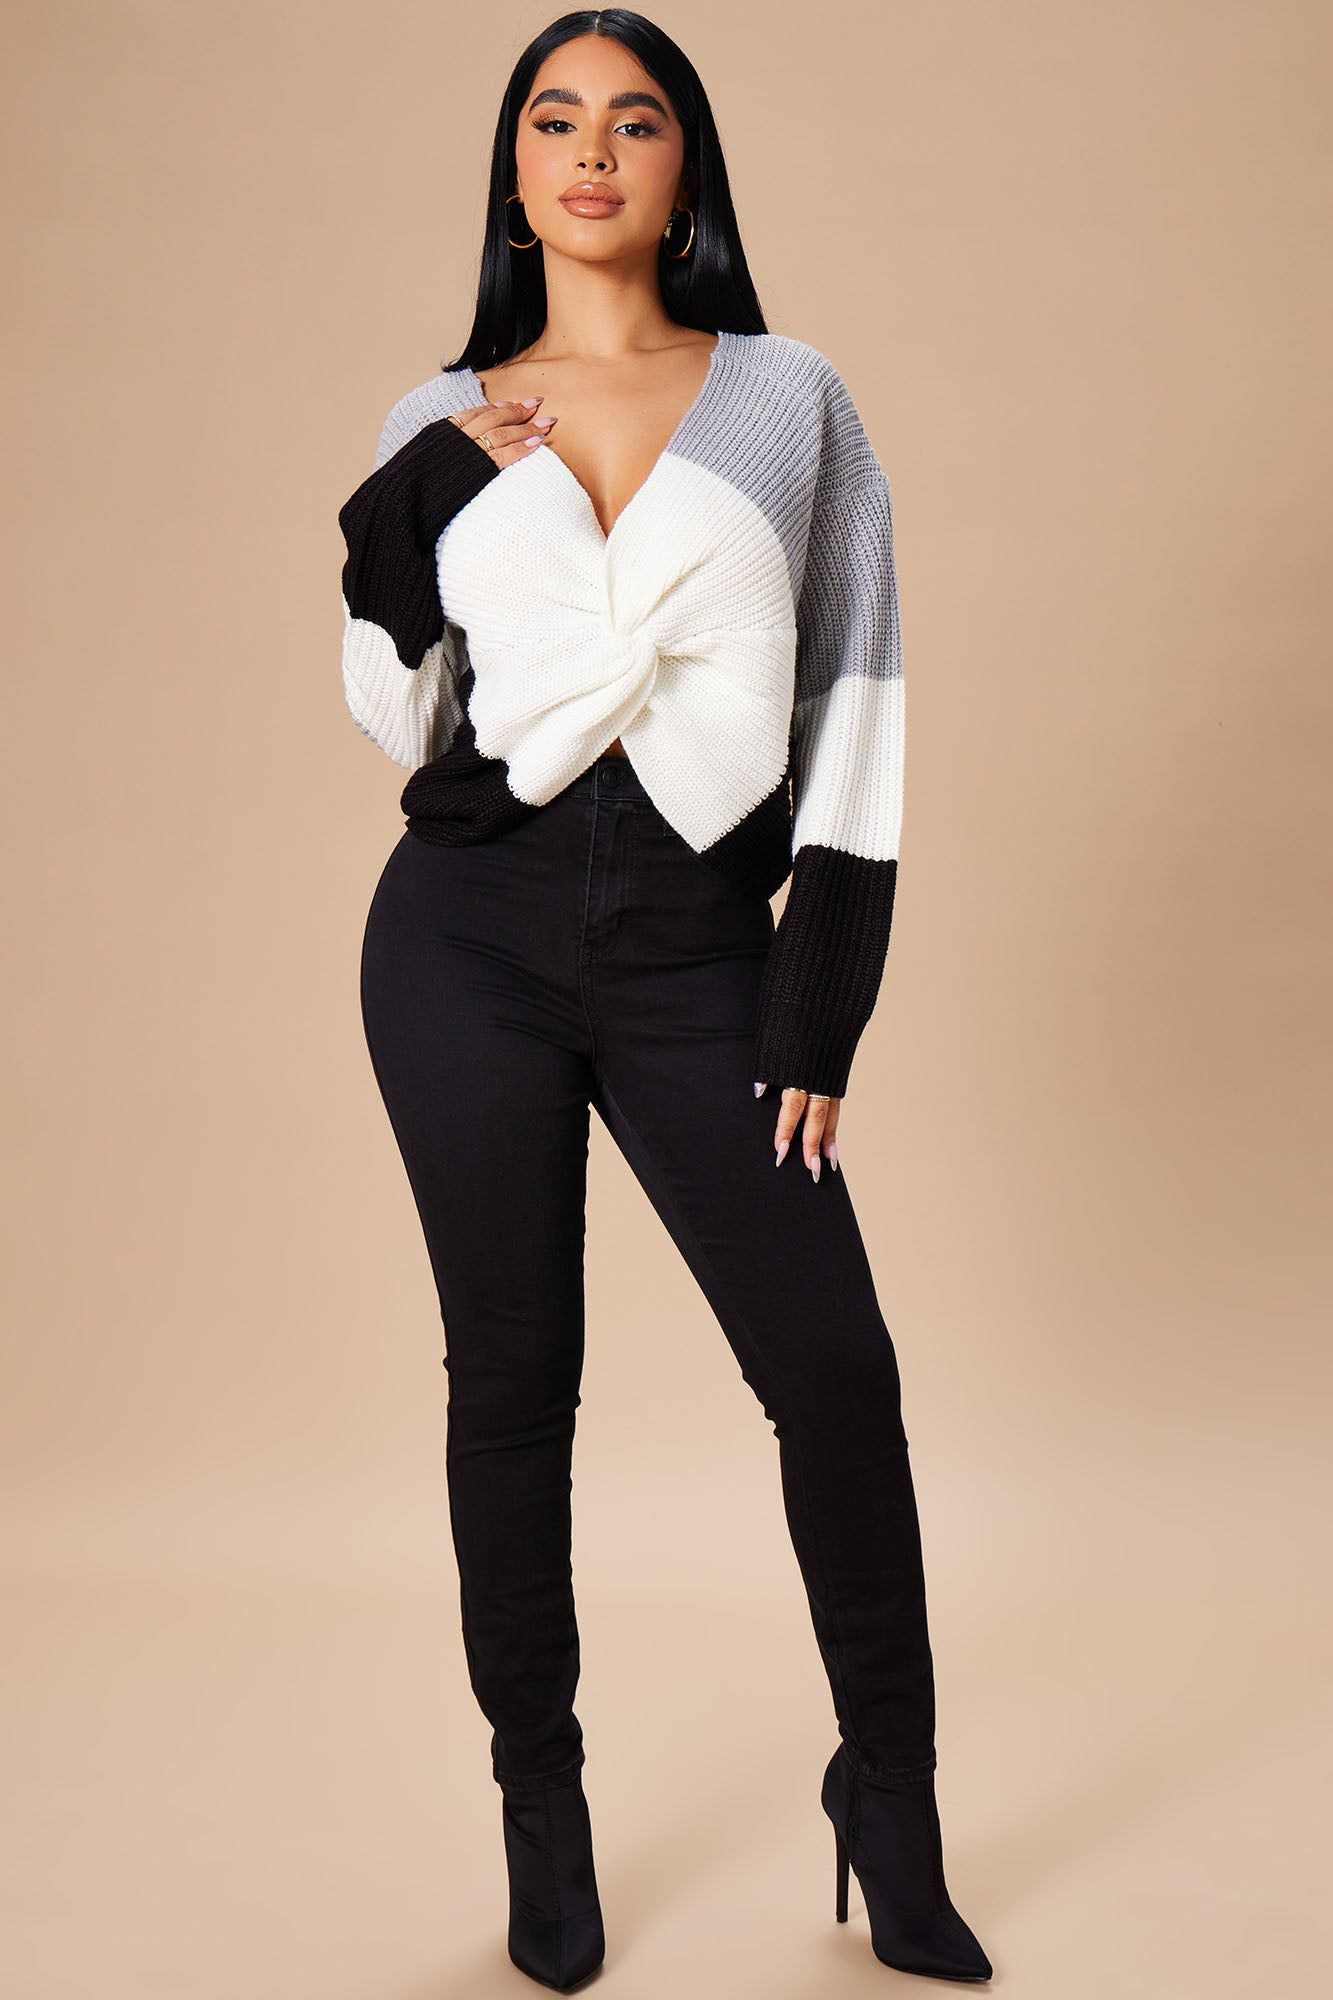 Women's Just A Little Twisted Sweater in Black Size 3X by Fashion Nova